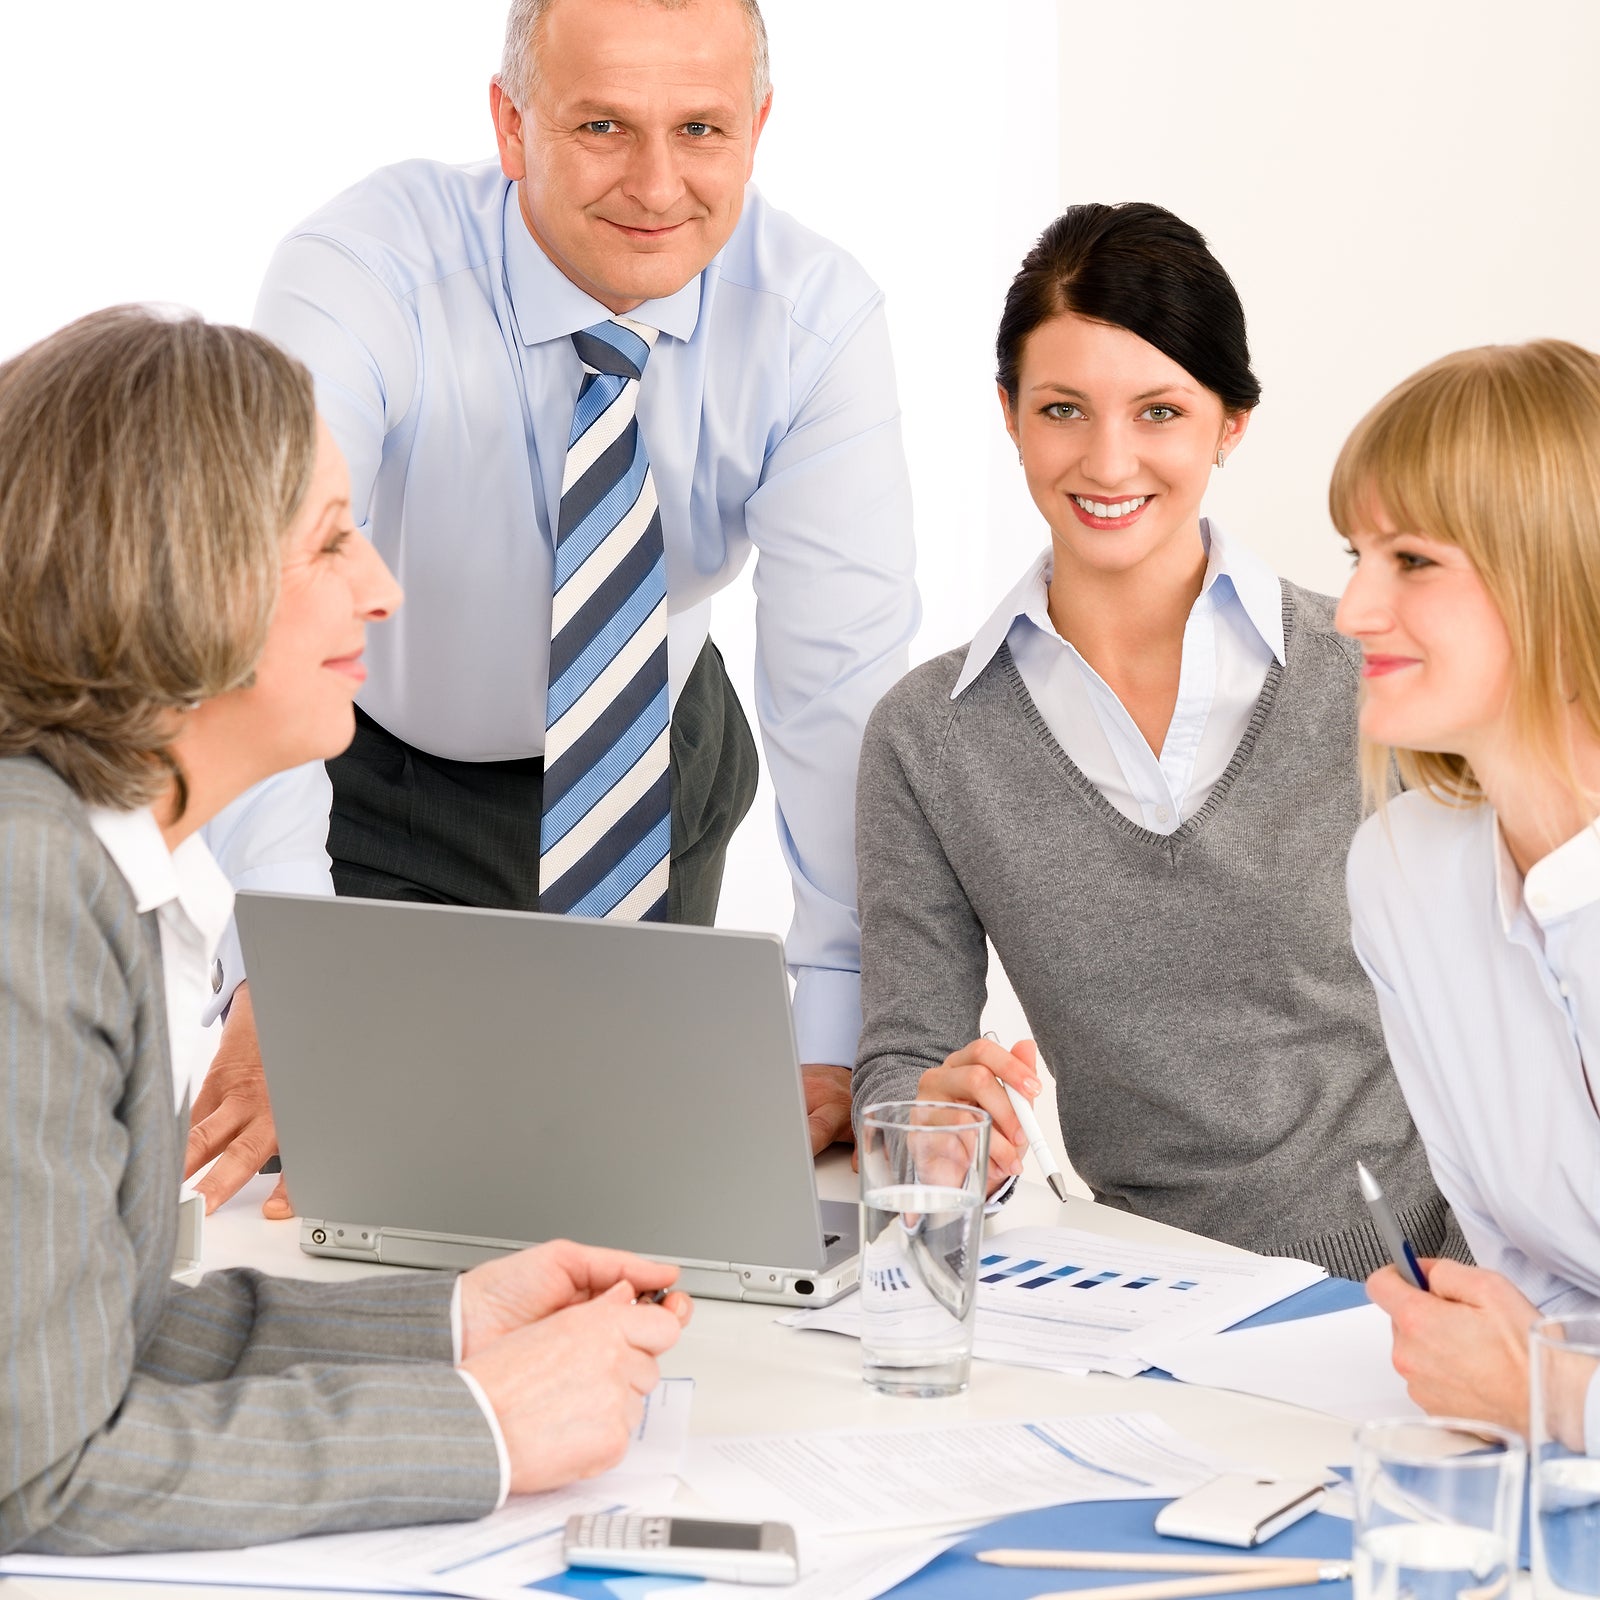 Business team meeting people around table brainstorming in office